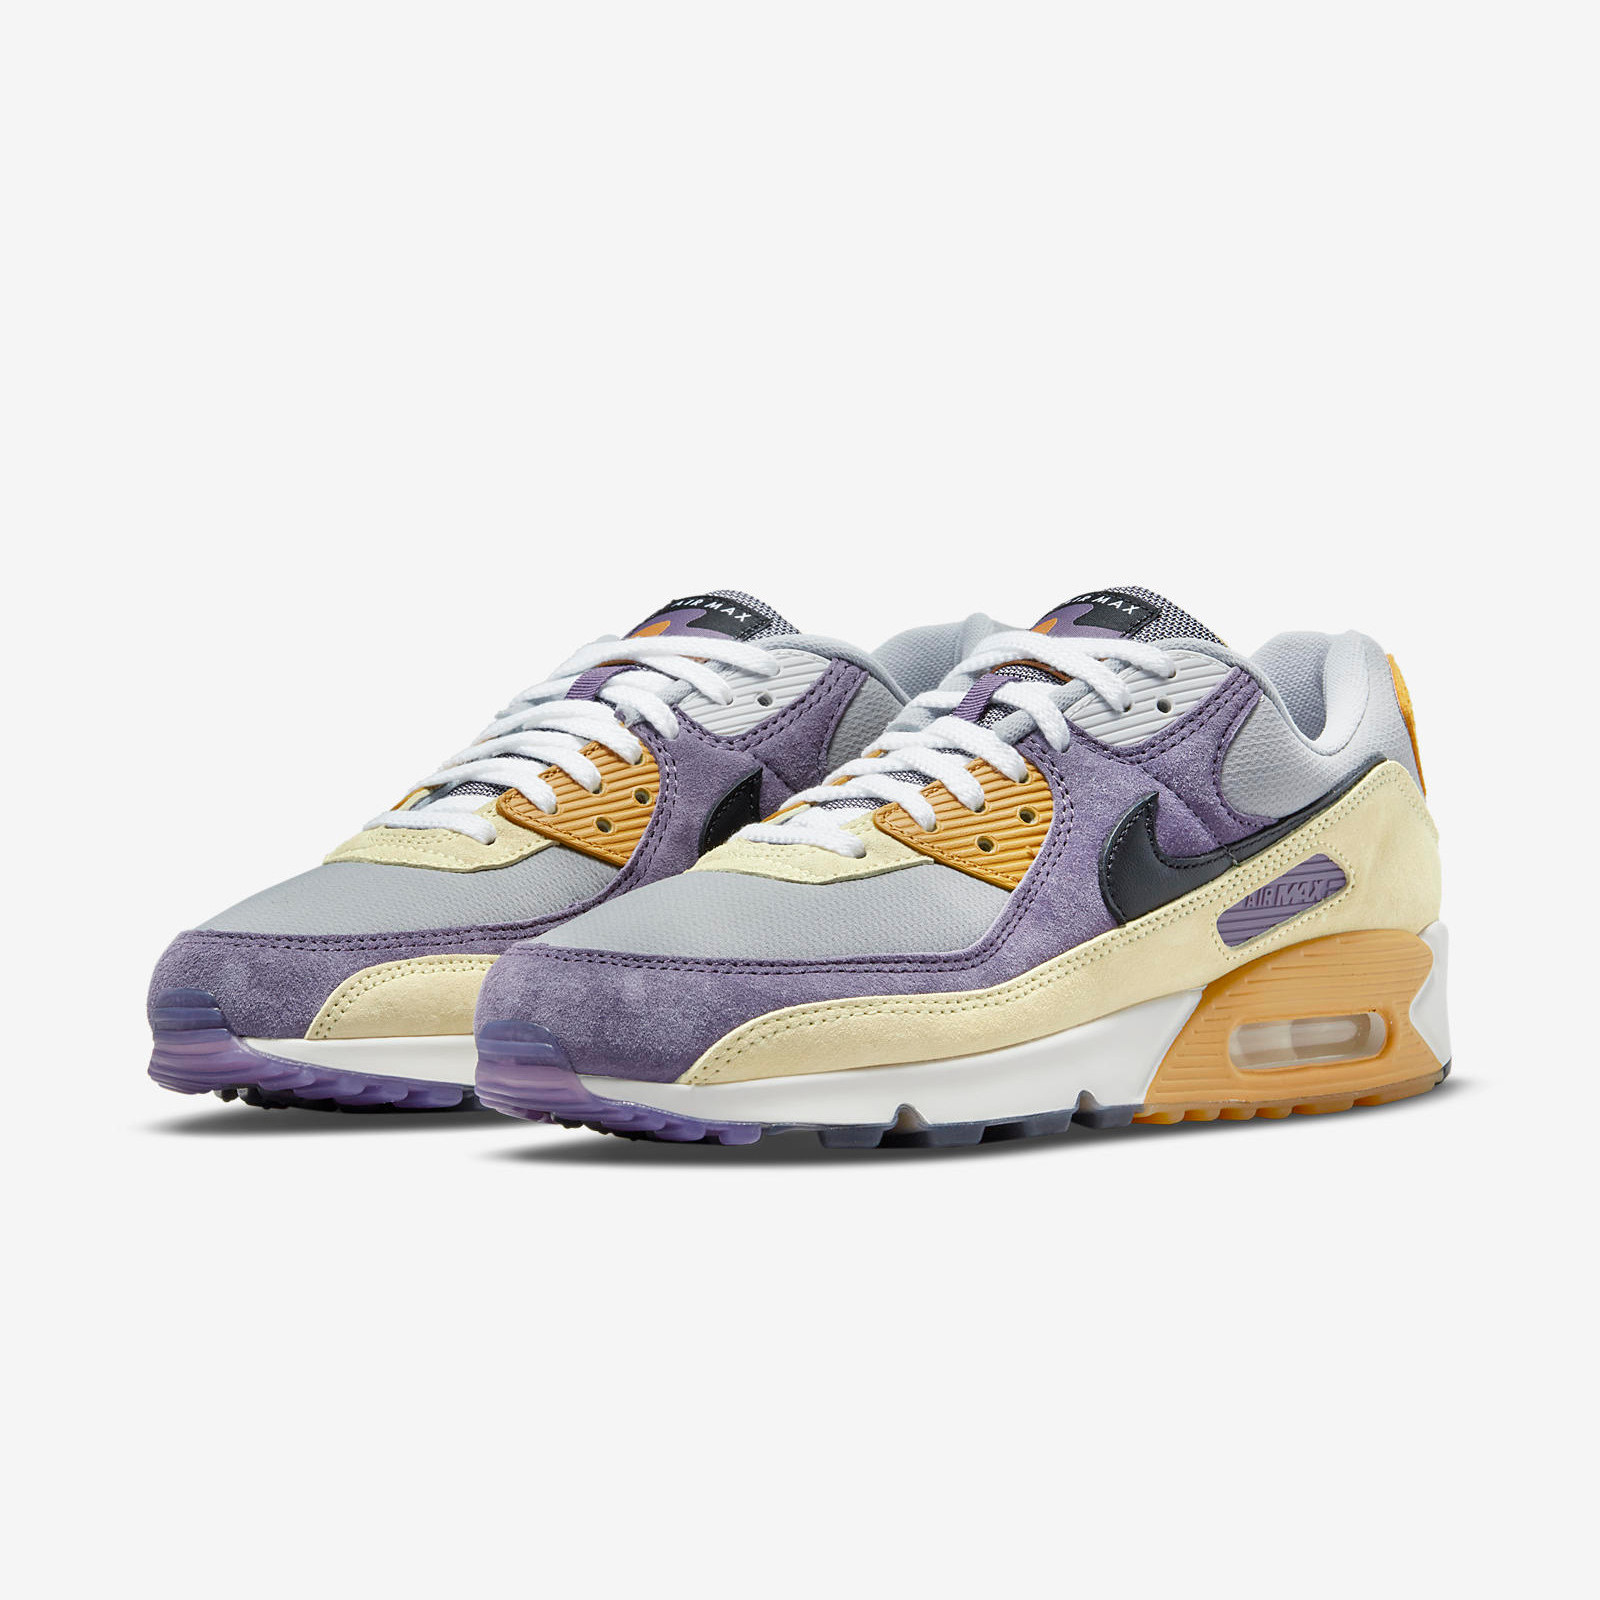 Nike Air Max 90
Purple / Lemon / Grey